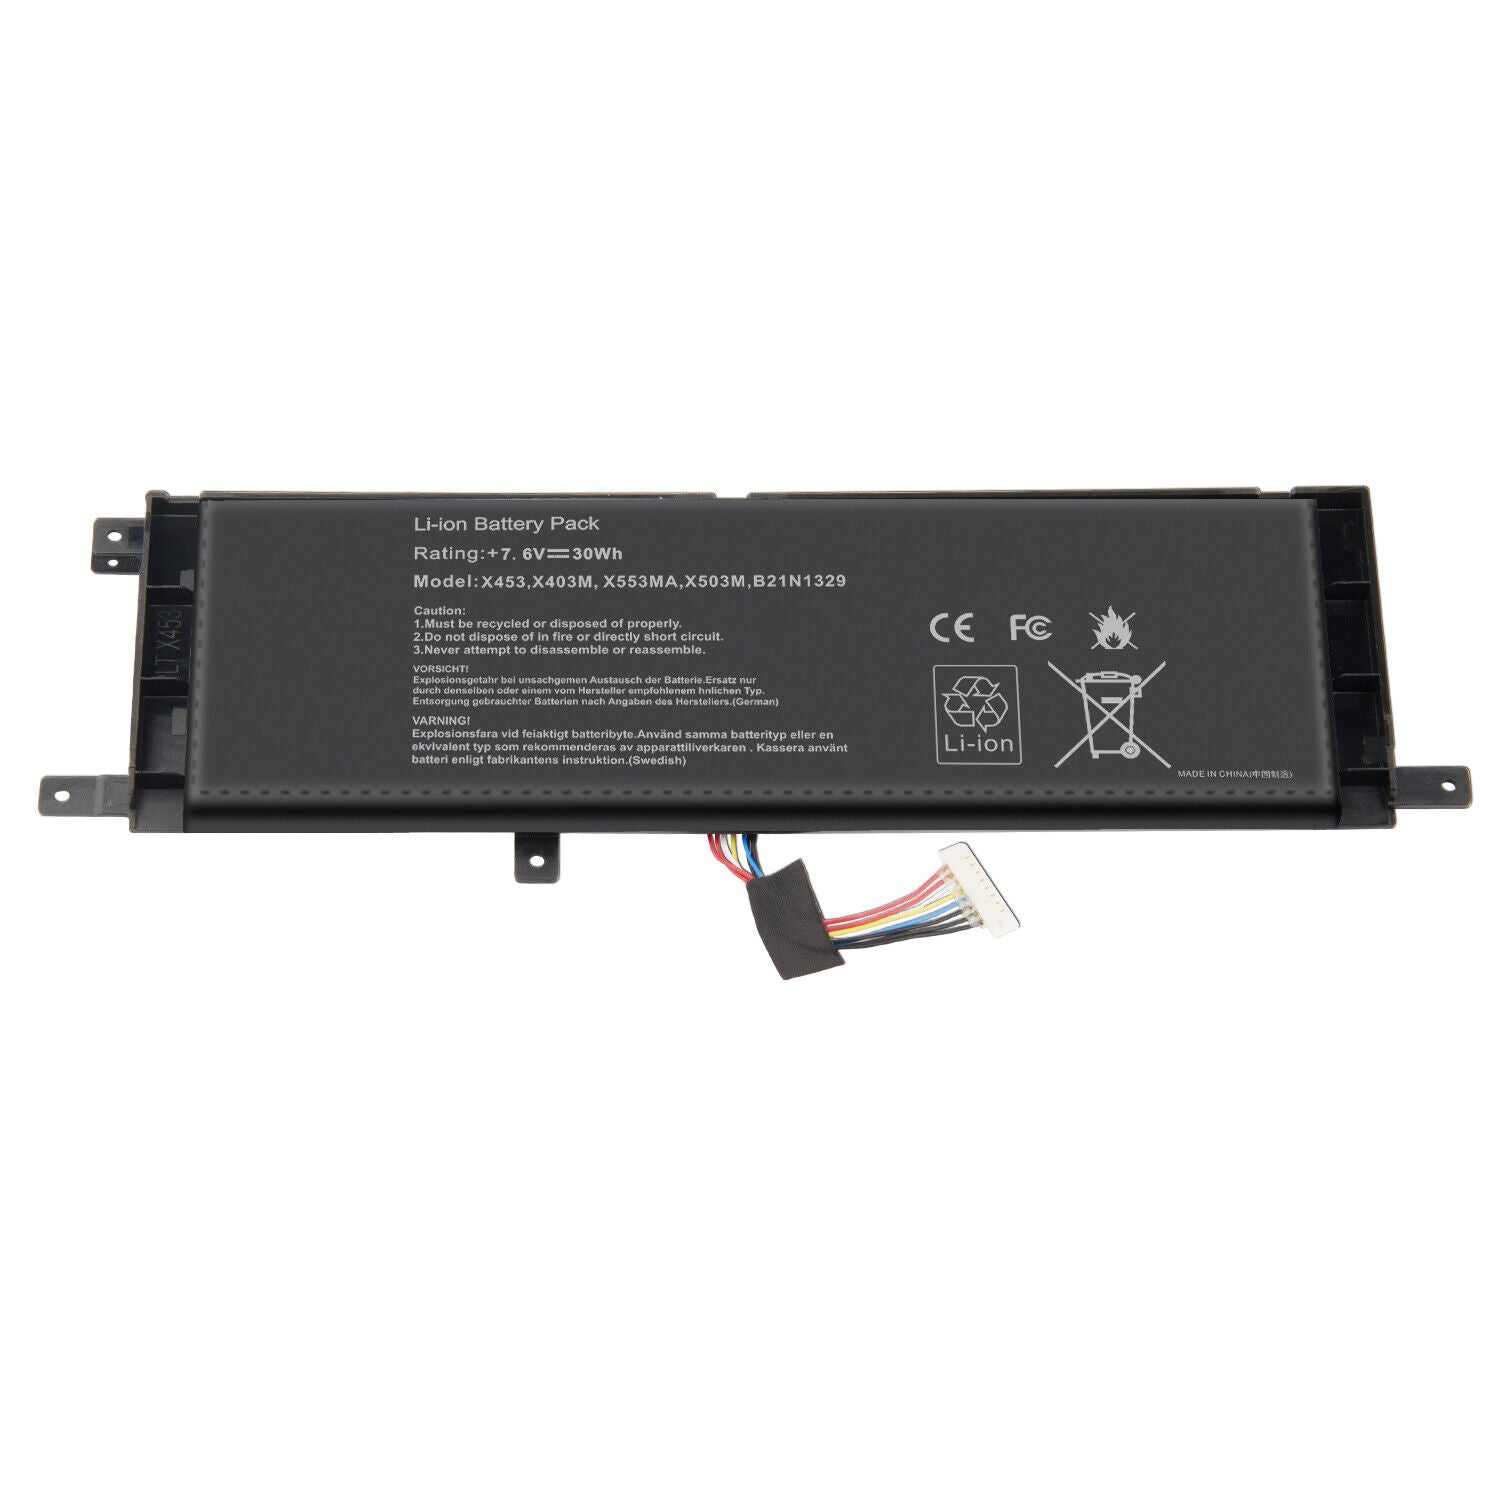 Compatible Battery for ASUS X453 X553MA D553MA F553M F553MA F553SA B21N1329 BAT-ASX453 AU - Office Catch